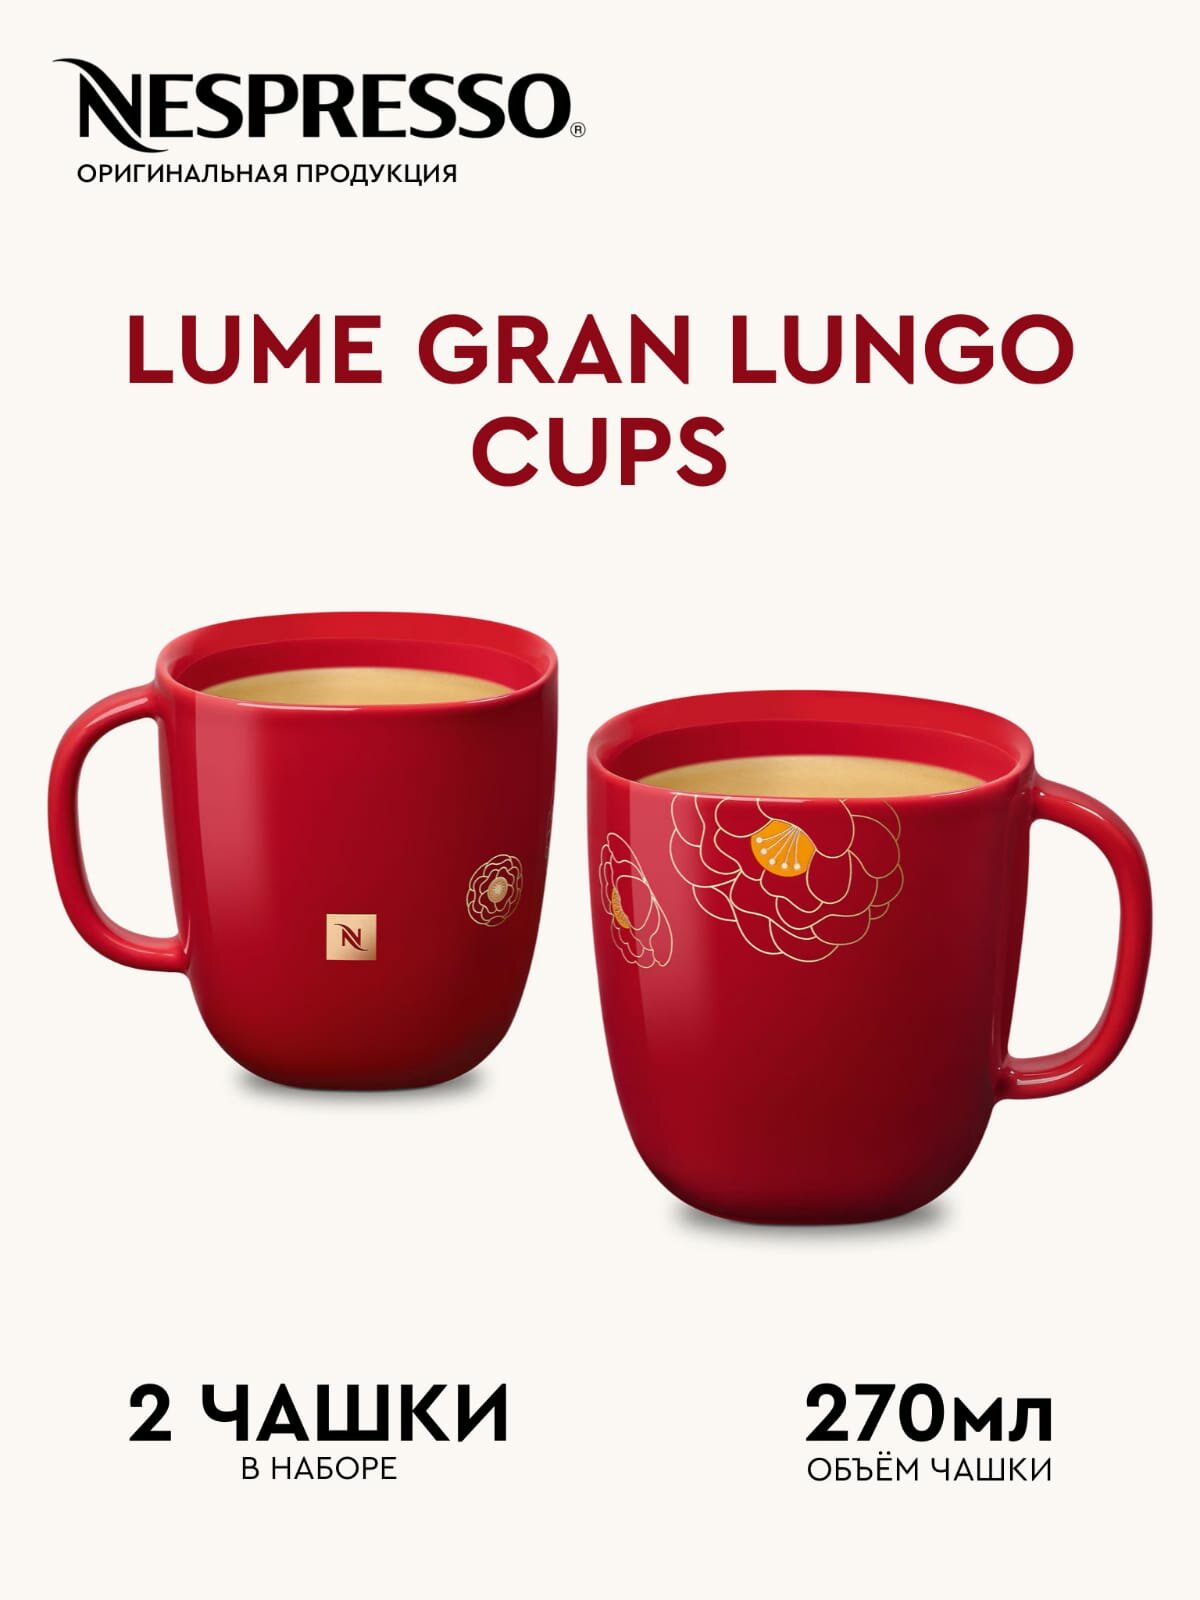 Кружки для кофе Nespresso Lume gran lungo cups